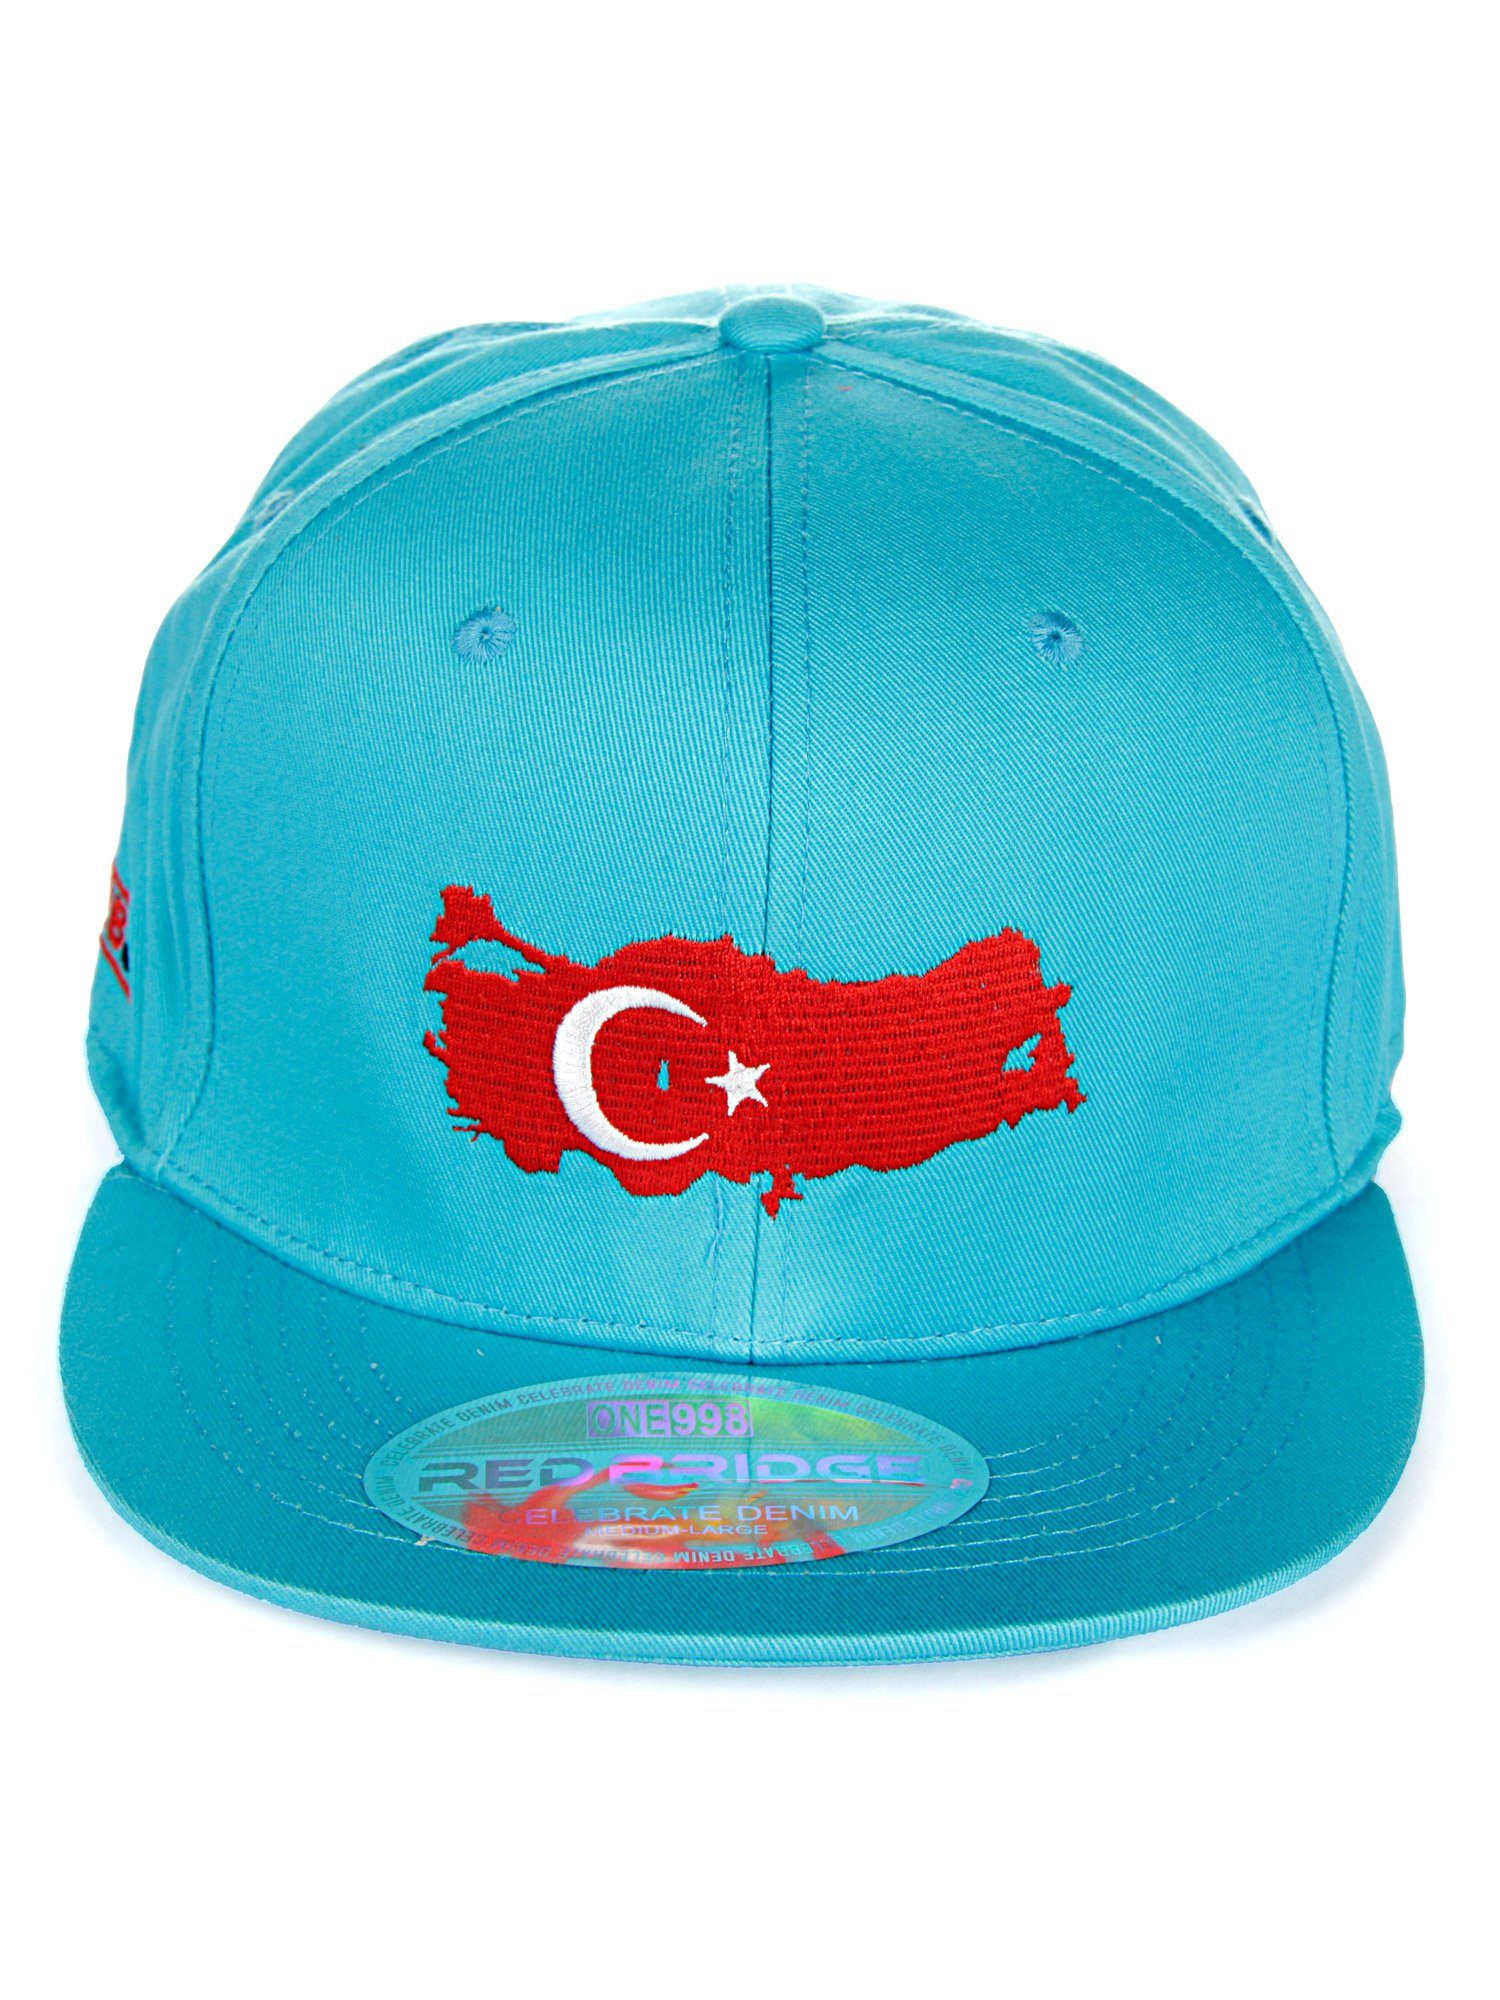 RedBridge Baseball Cap Furham mit Türkei-Stickerei